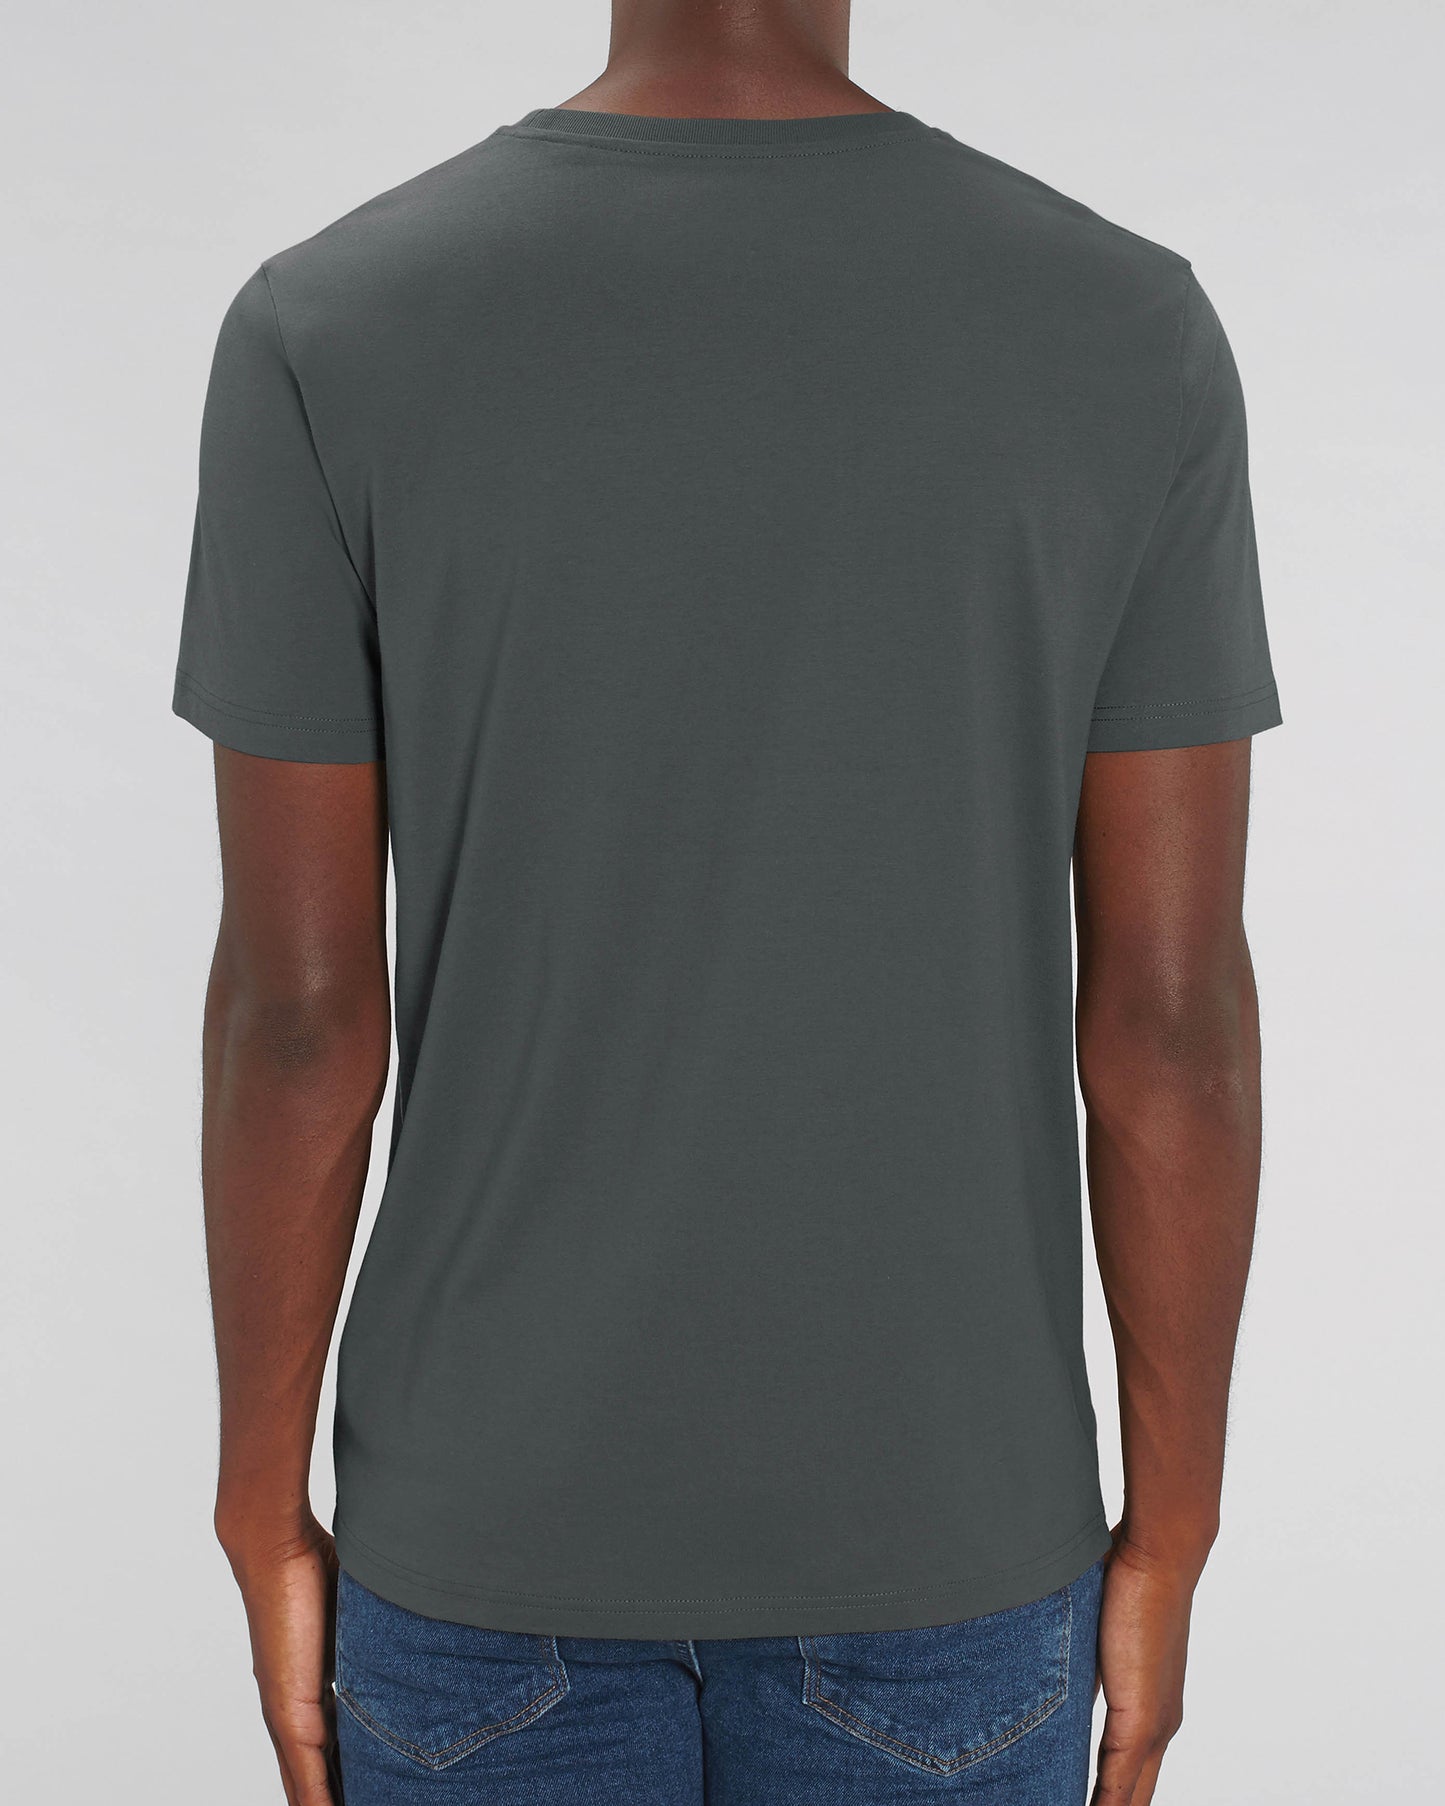 Hang Ten Surfer T-shirt - Anthracite Gray